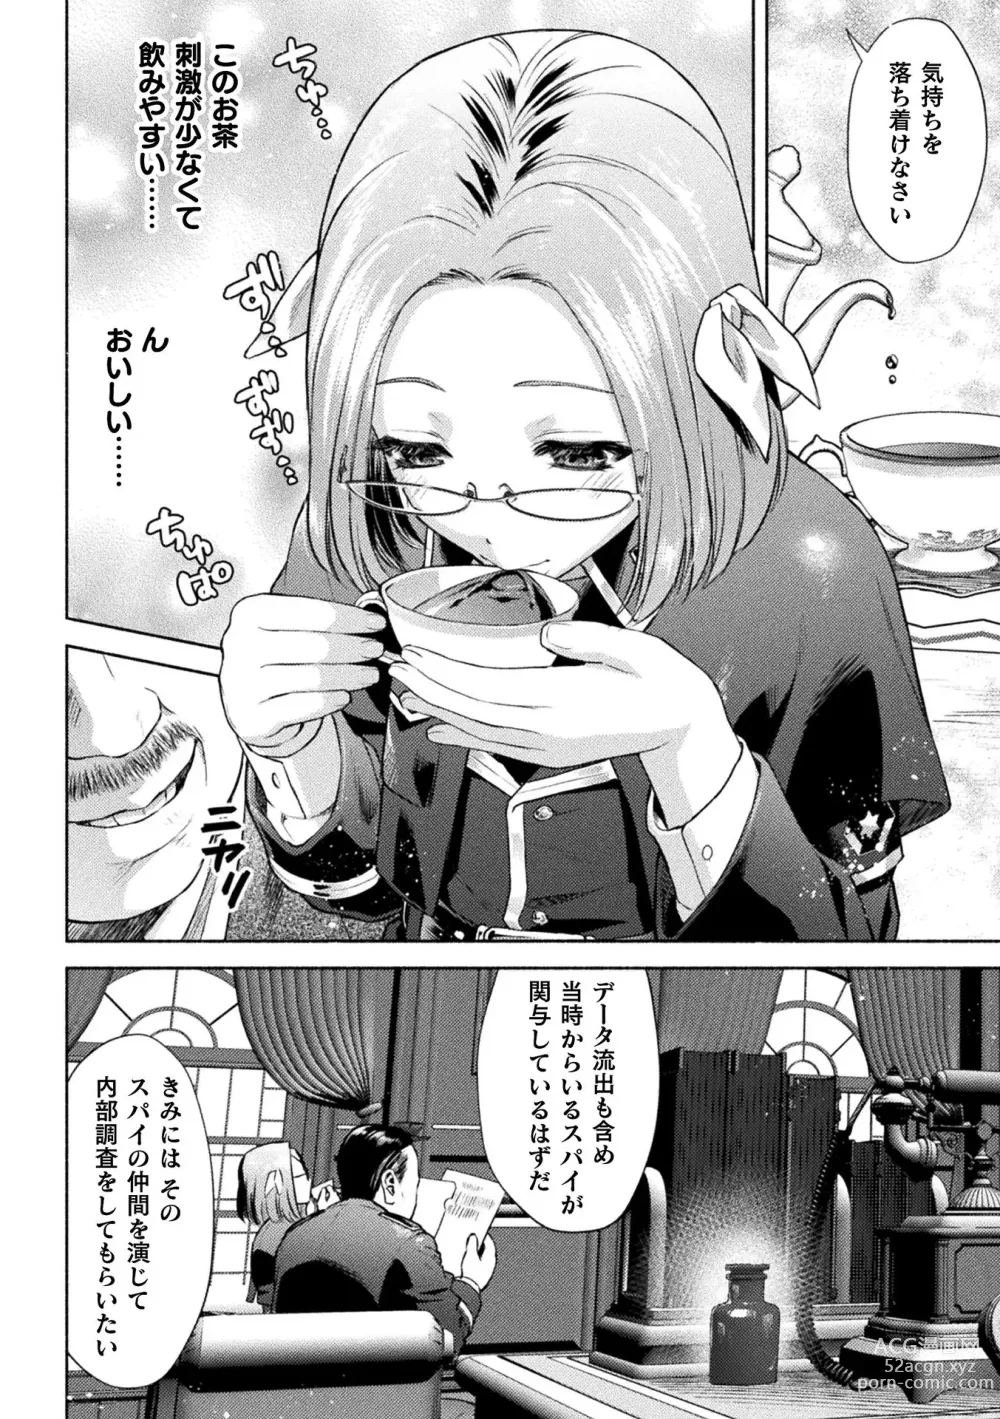 Page 16 of manga Kukkoro Heroines Vol. 34